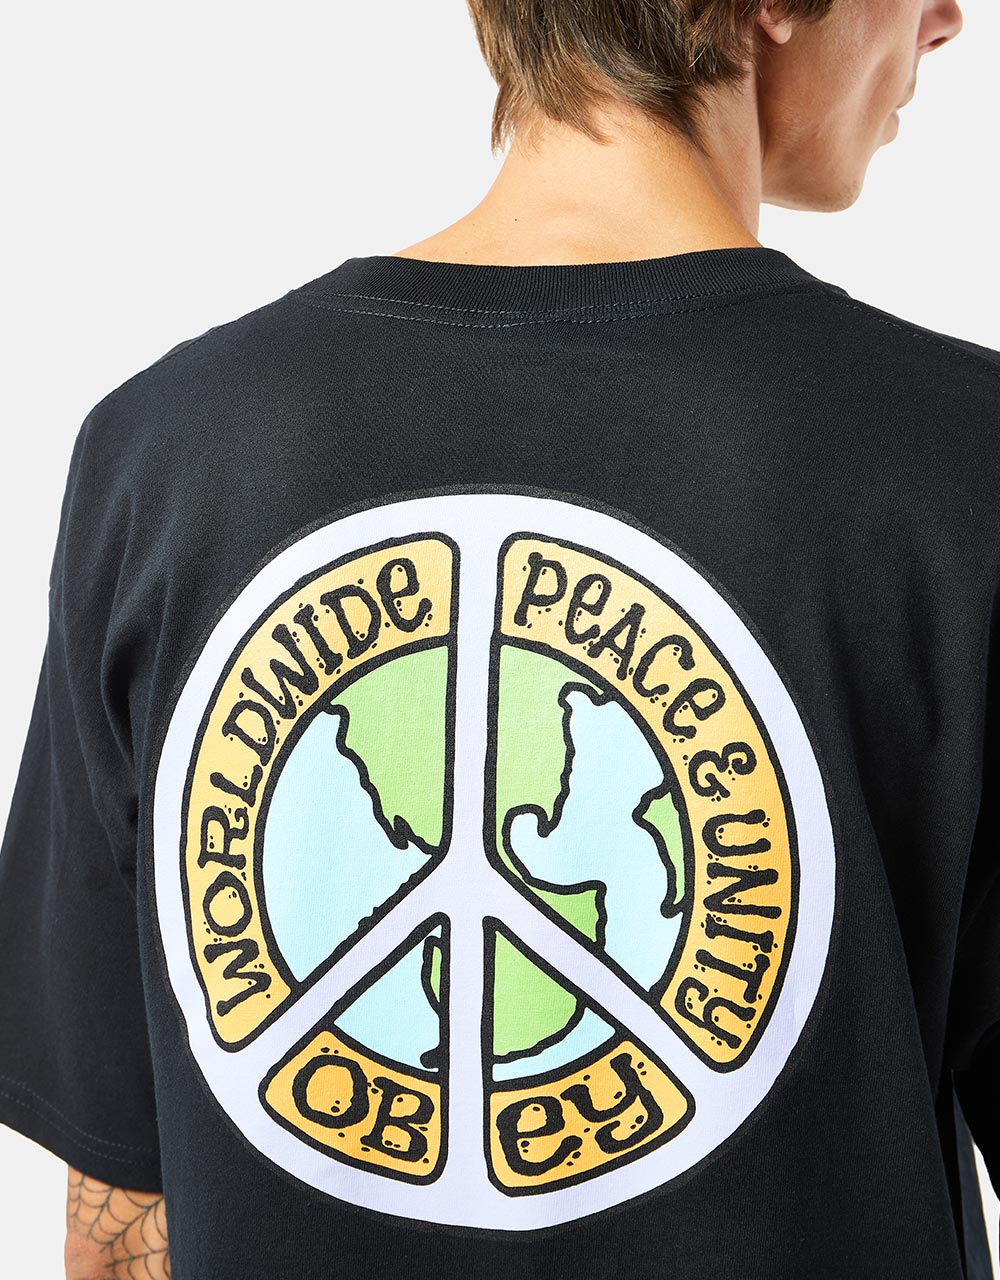 Obey Peace & Unity T-Shirt - Black